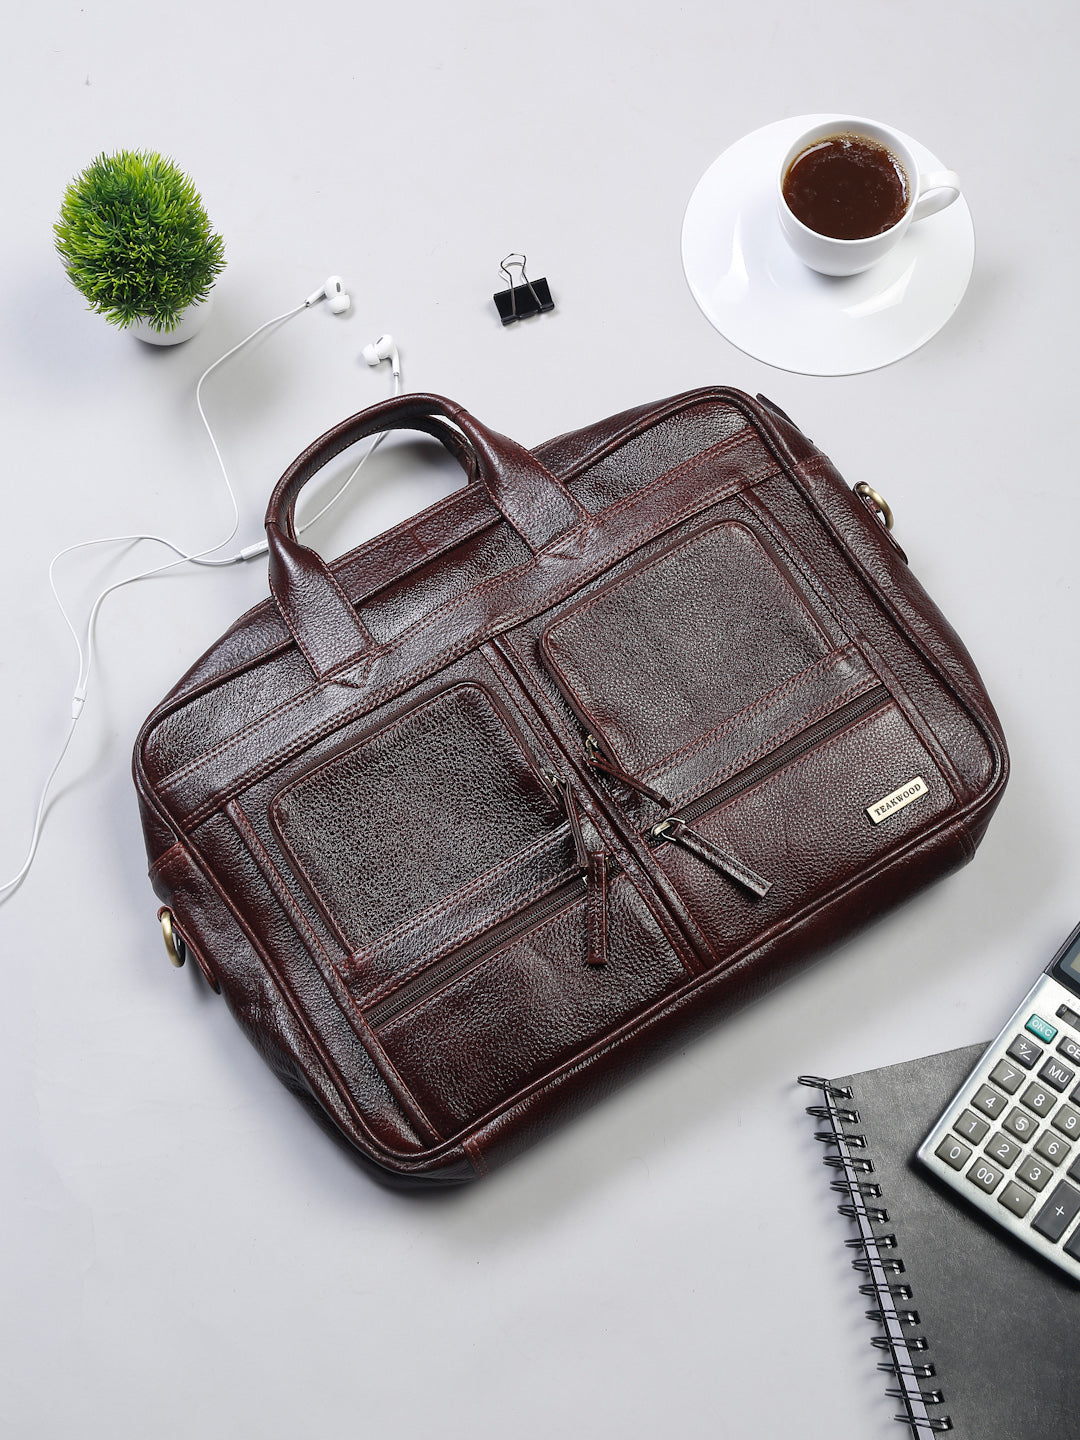 Amazon.com: Laptop Bag for Women 15.6 inch Laptop Tote Bag Leather Computer  Briefcase for Work Waterproof Handbag Shoulder Bag Women Business Office Bag  Black : Electronics